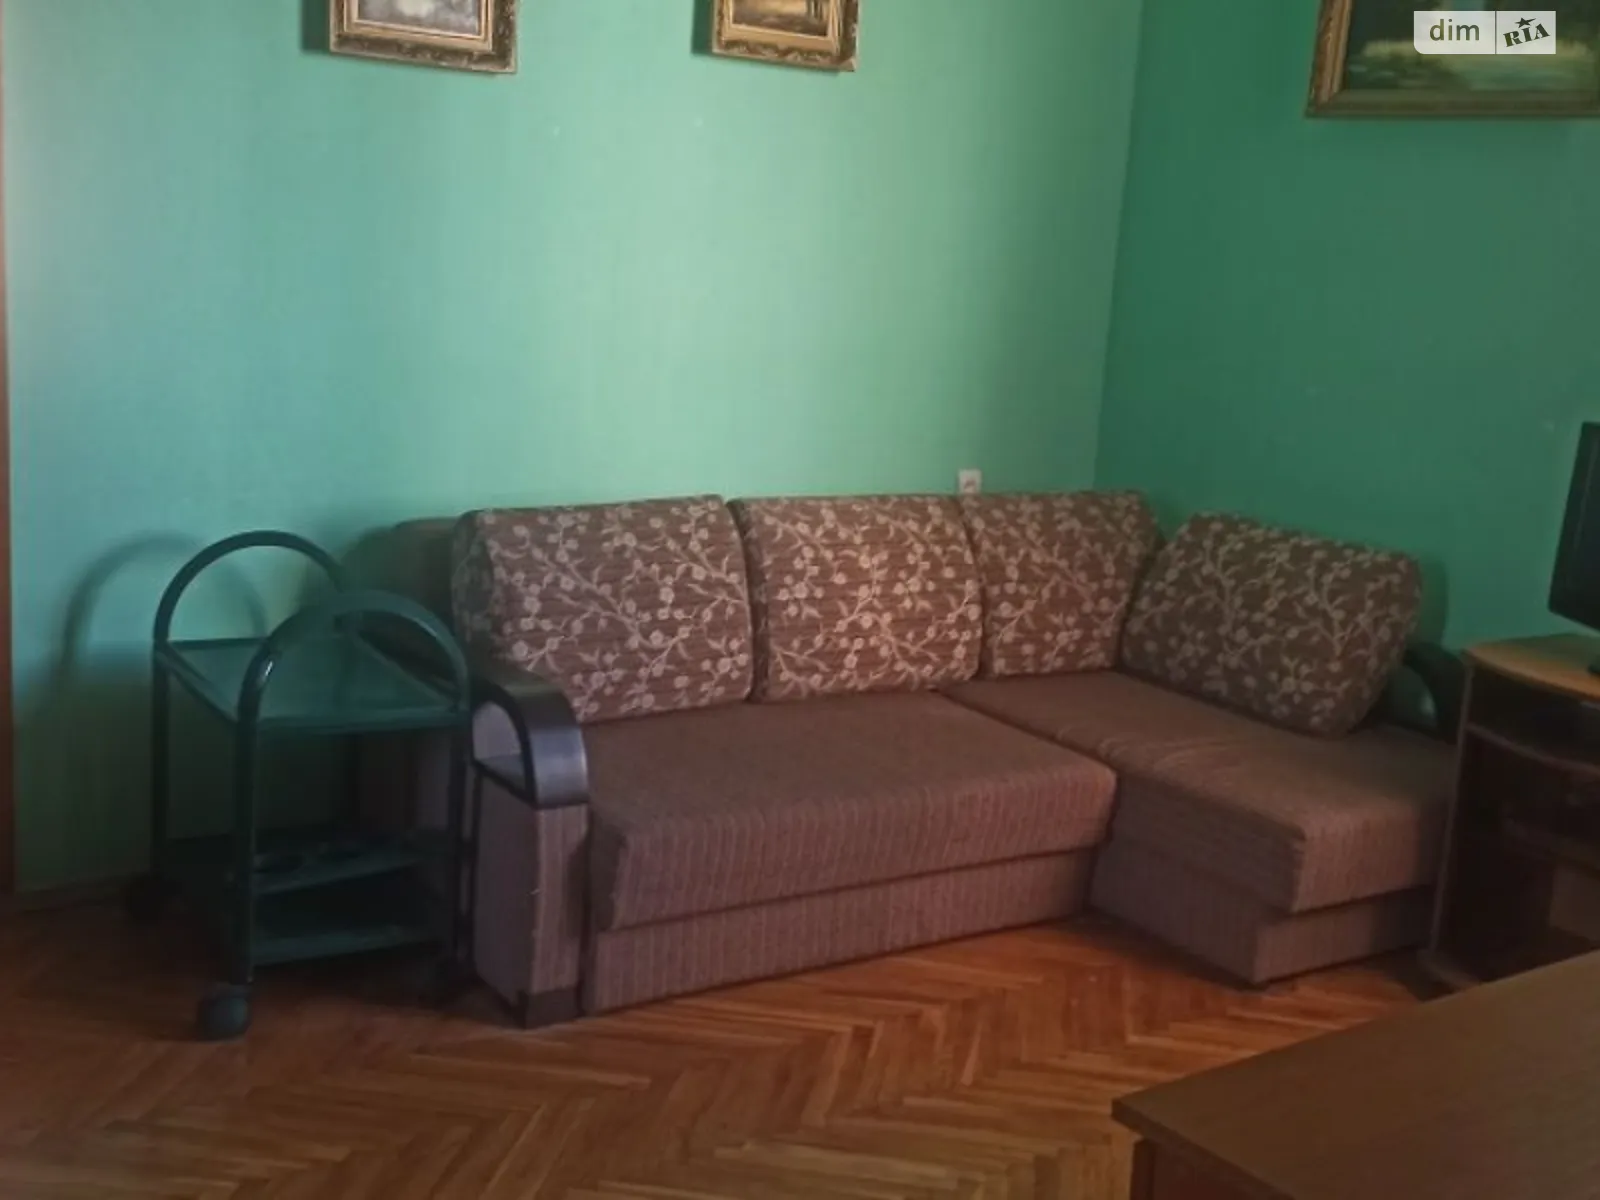 Сдается в аренду 2-комнатная квартира 50 кв. м в Киеве, ул. Ивана Франко, 27 - фото 1